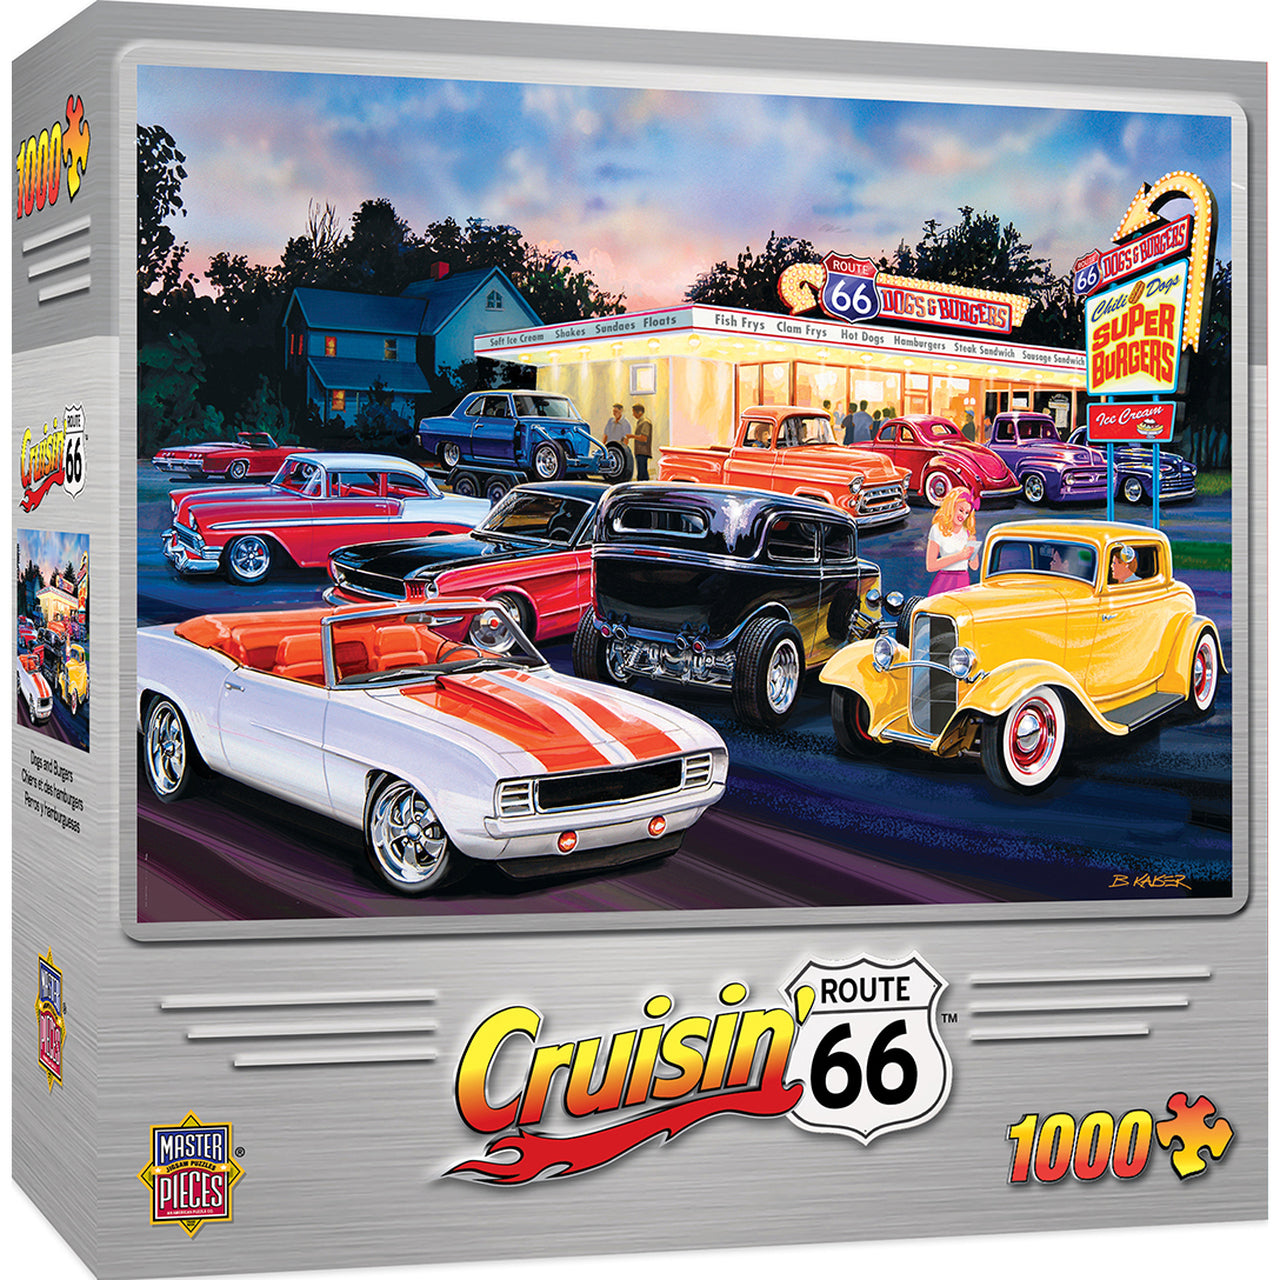 Cruisin' Route 66 Dogs &amp; Burgers - puzzel van 1000 stukjes door Bruce Kaiser